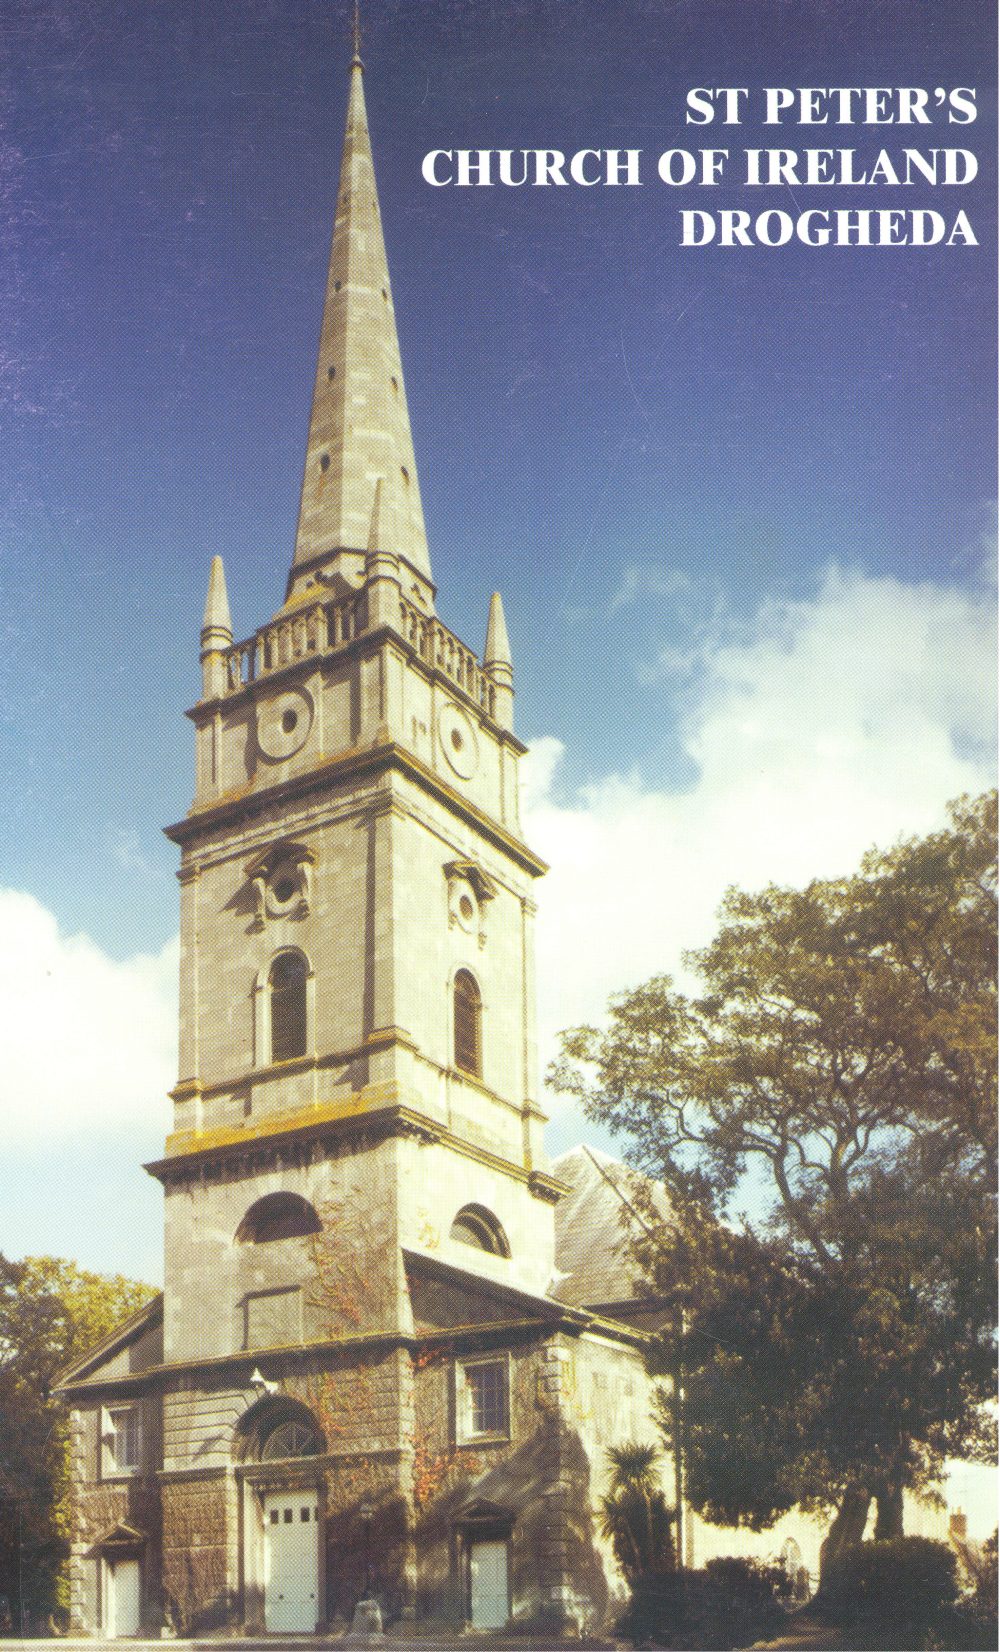 Michael Graham, "St Peter's Church of Ireland Drogheda: A History" (Drogheda, 2002)